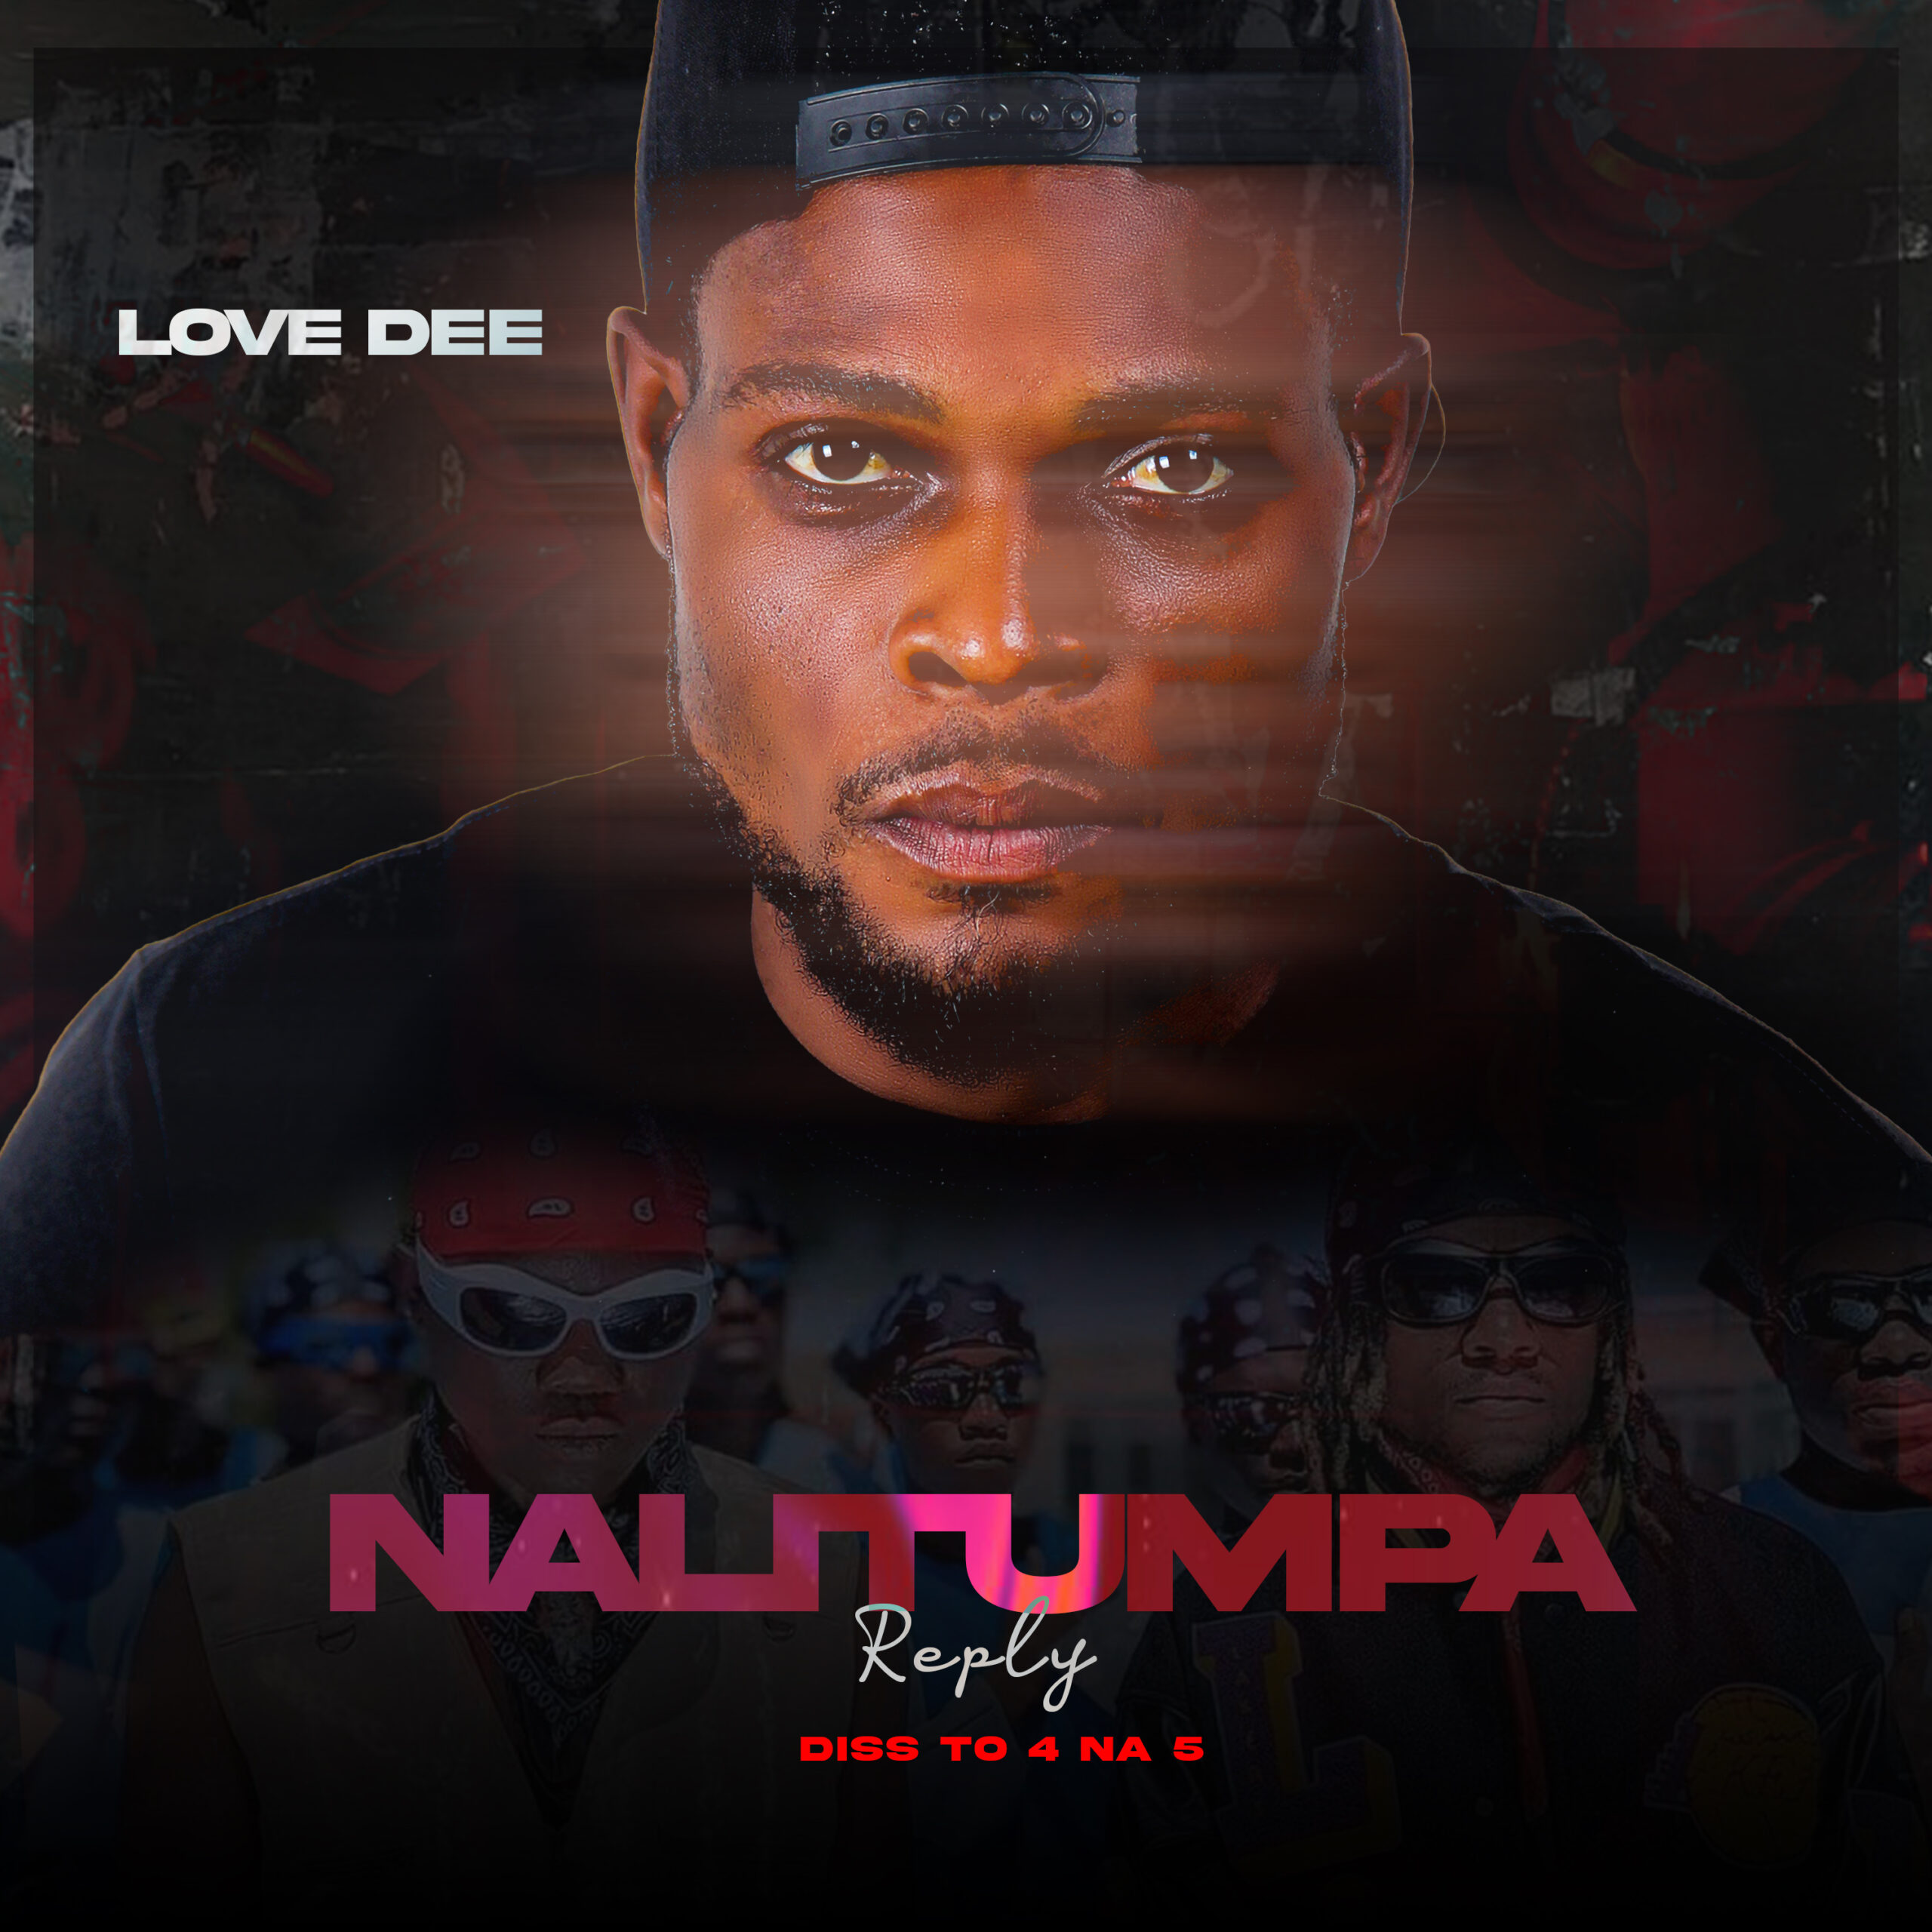 Love Dee - Diss to 4 Na 5 (Nalitumpa Reply)